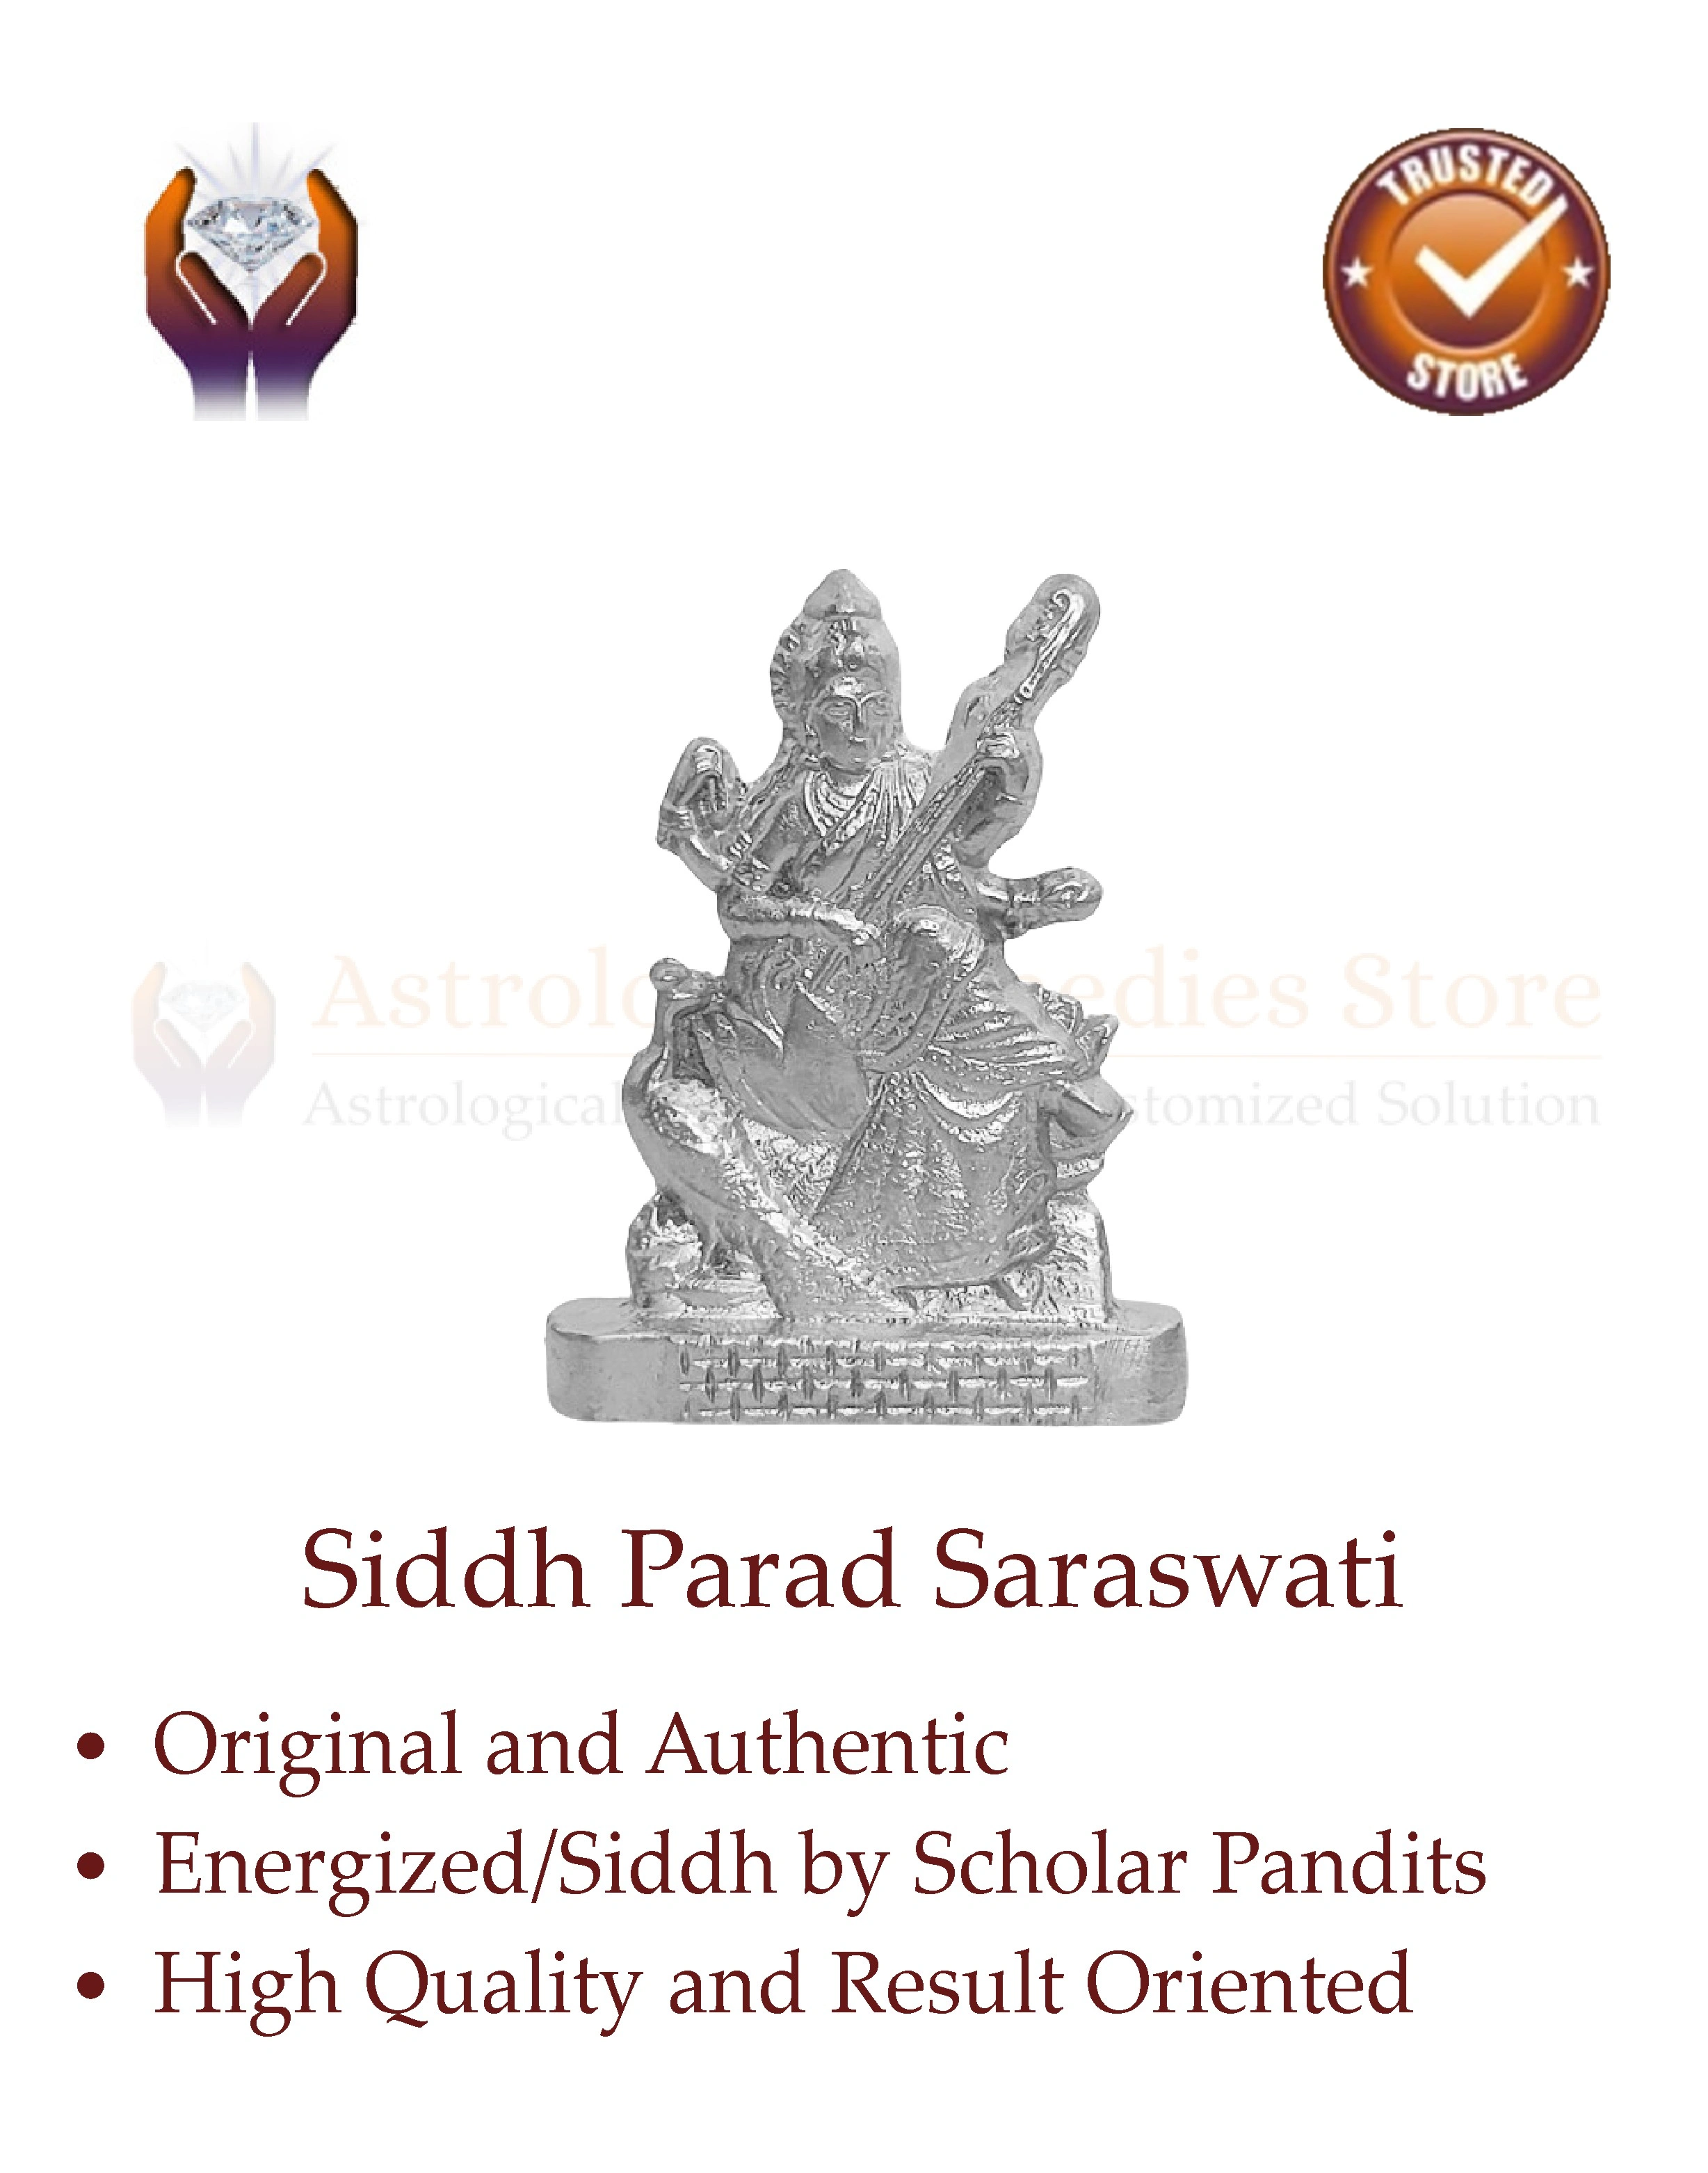 Parad Saraswati Benefits